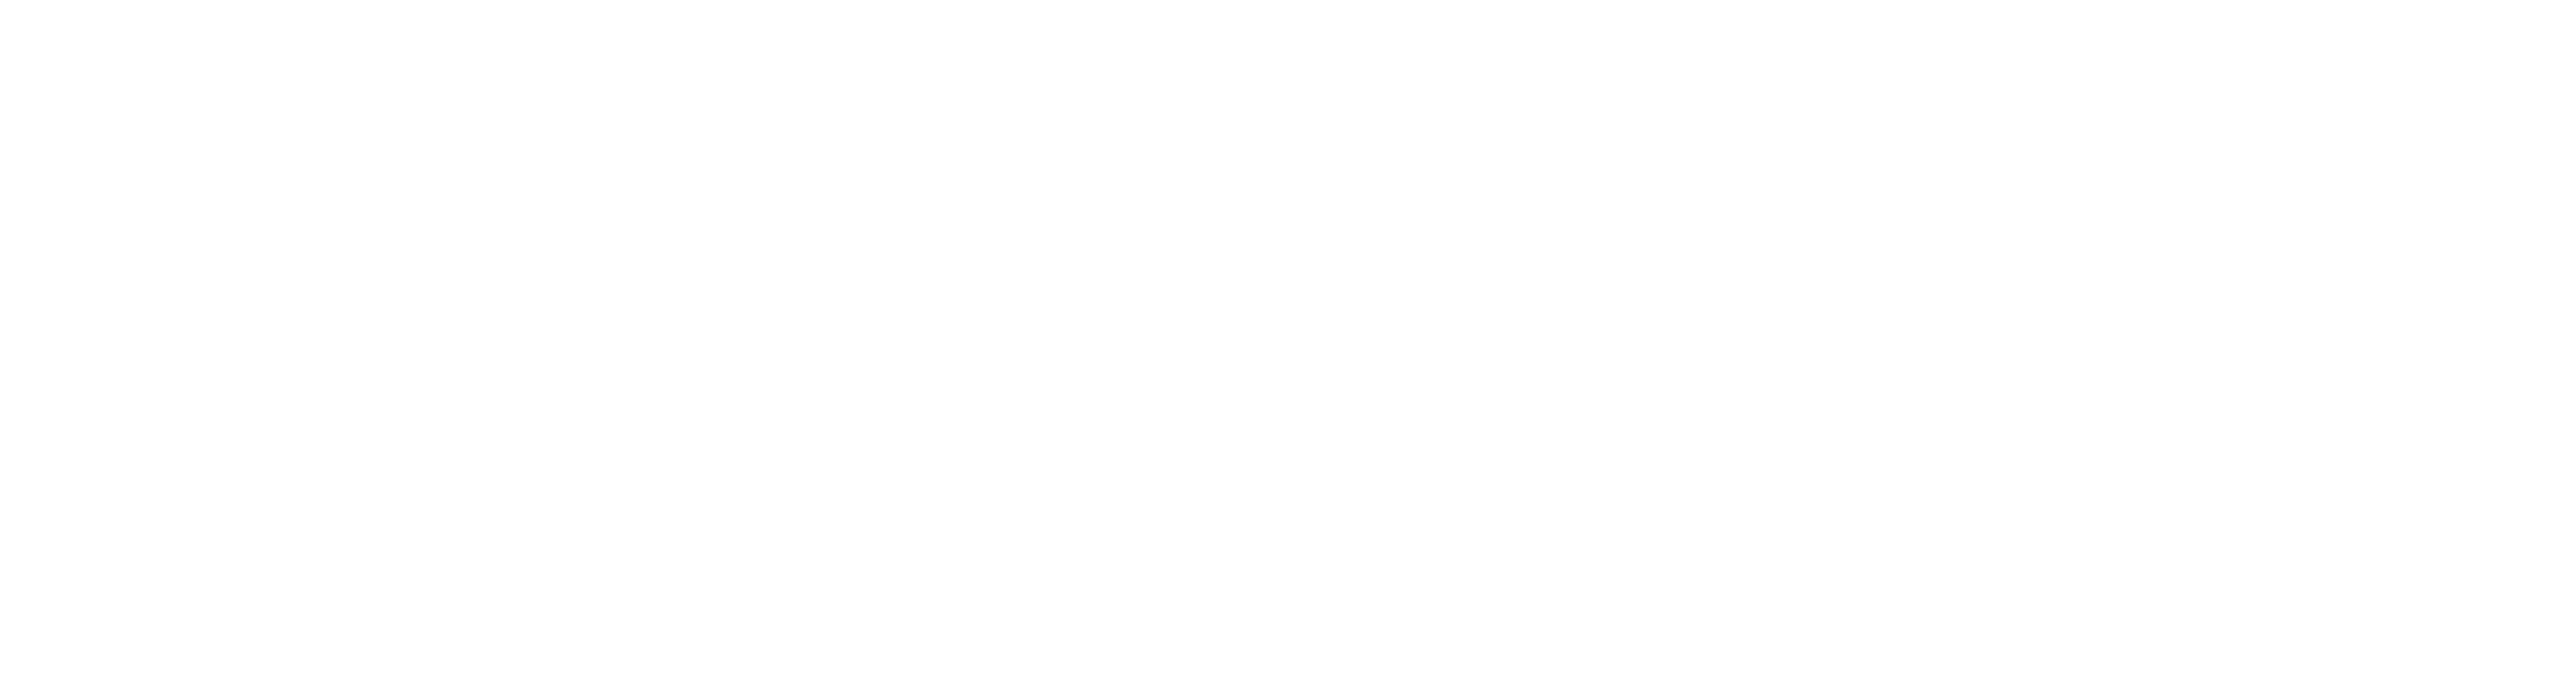 AniCura Kumla Djursjukhus logo